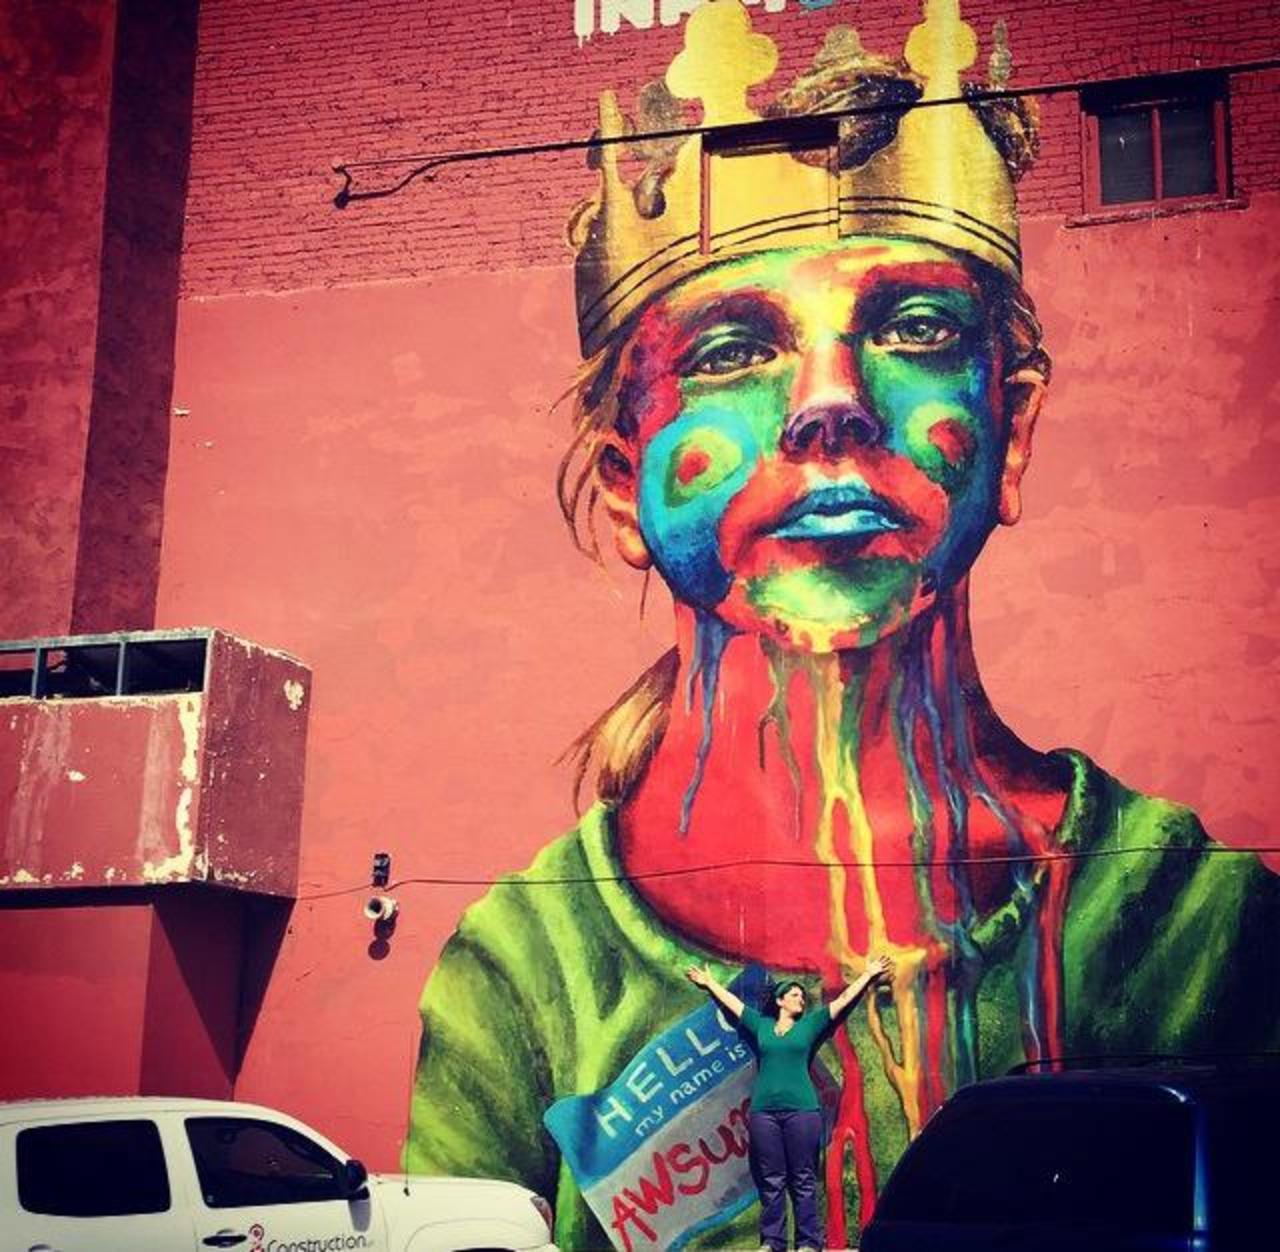 Street Art by Naomi Haverland in Denver Colorado 

#art #arte #graffiti #streetart http://t.co/k0q3yJkdKk